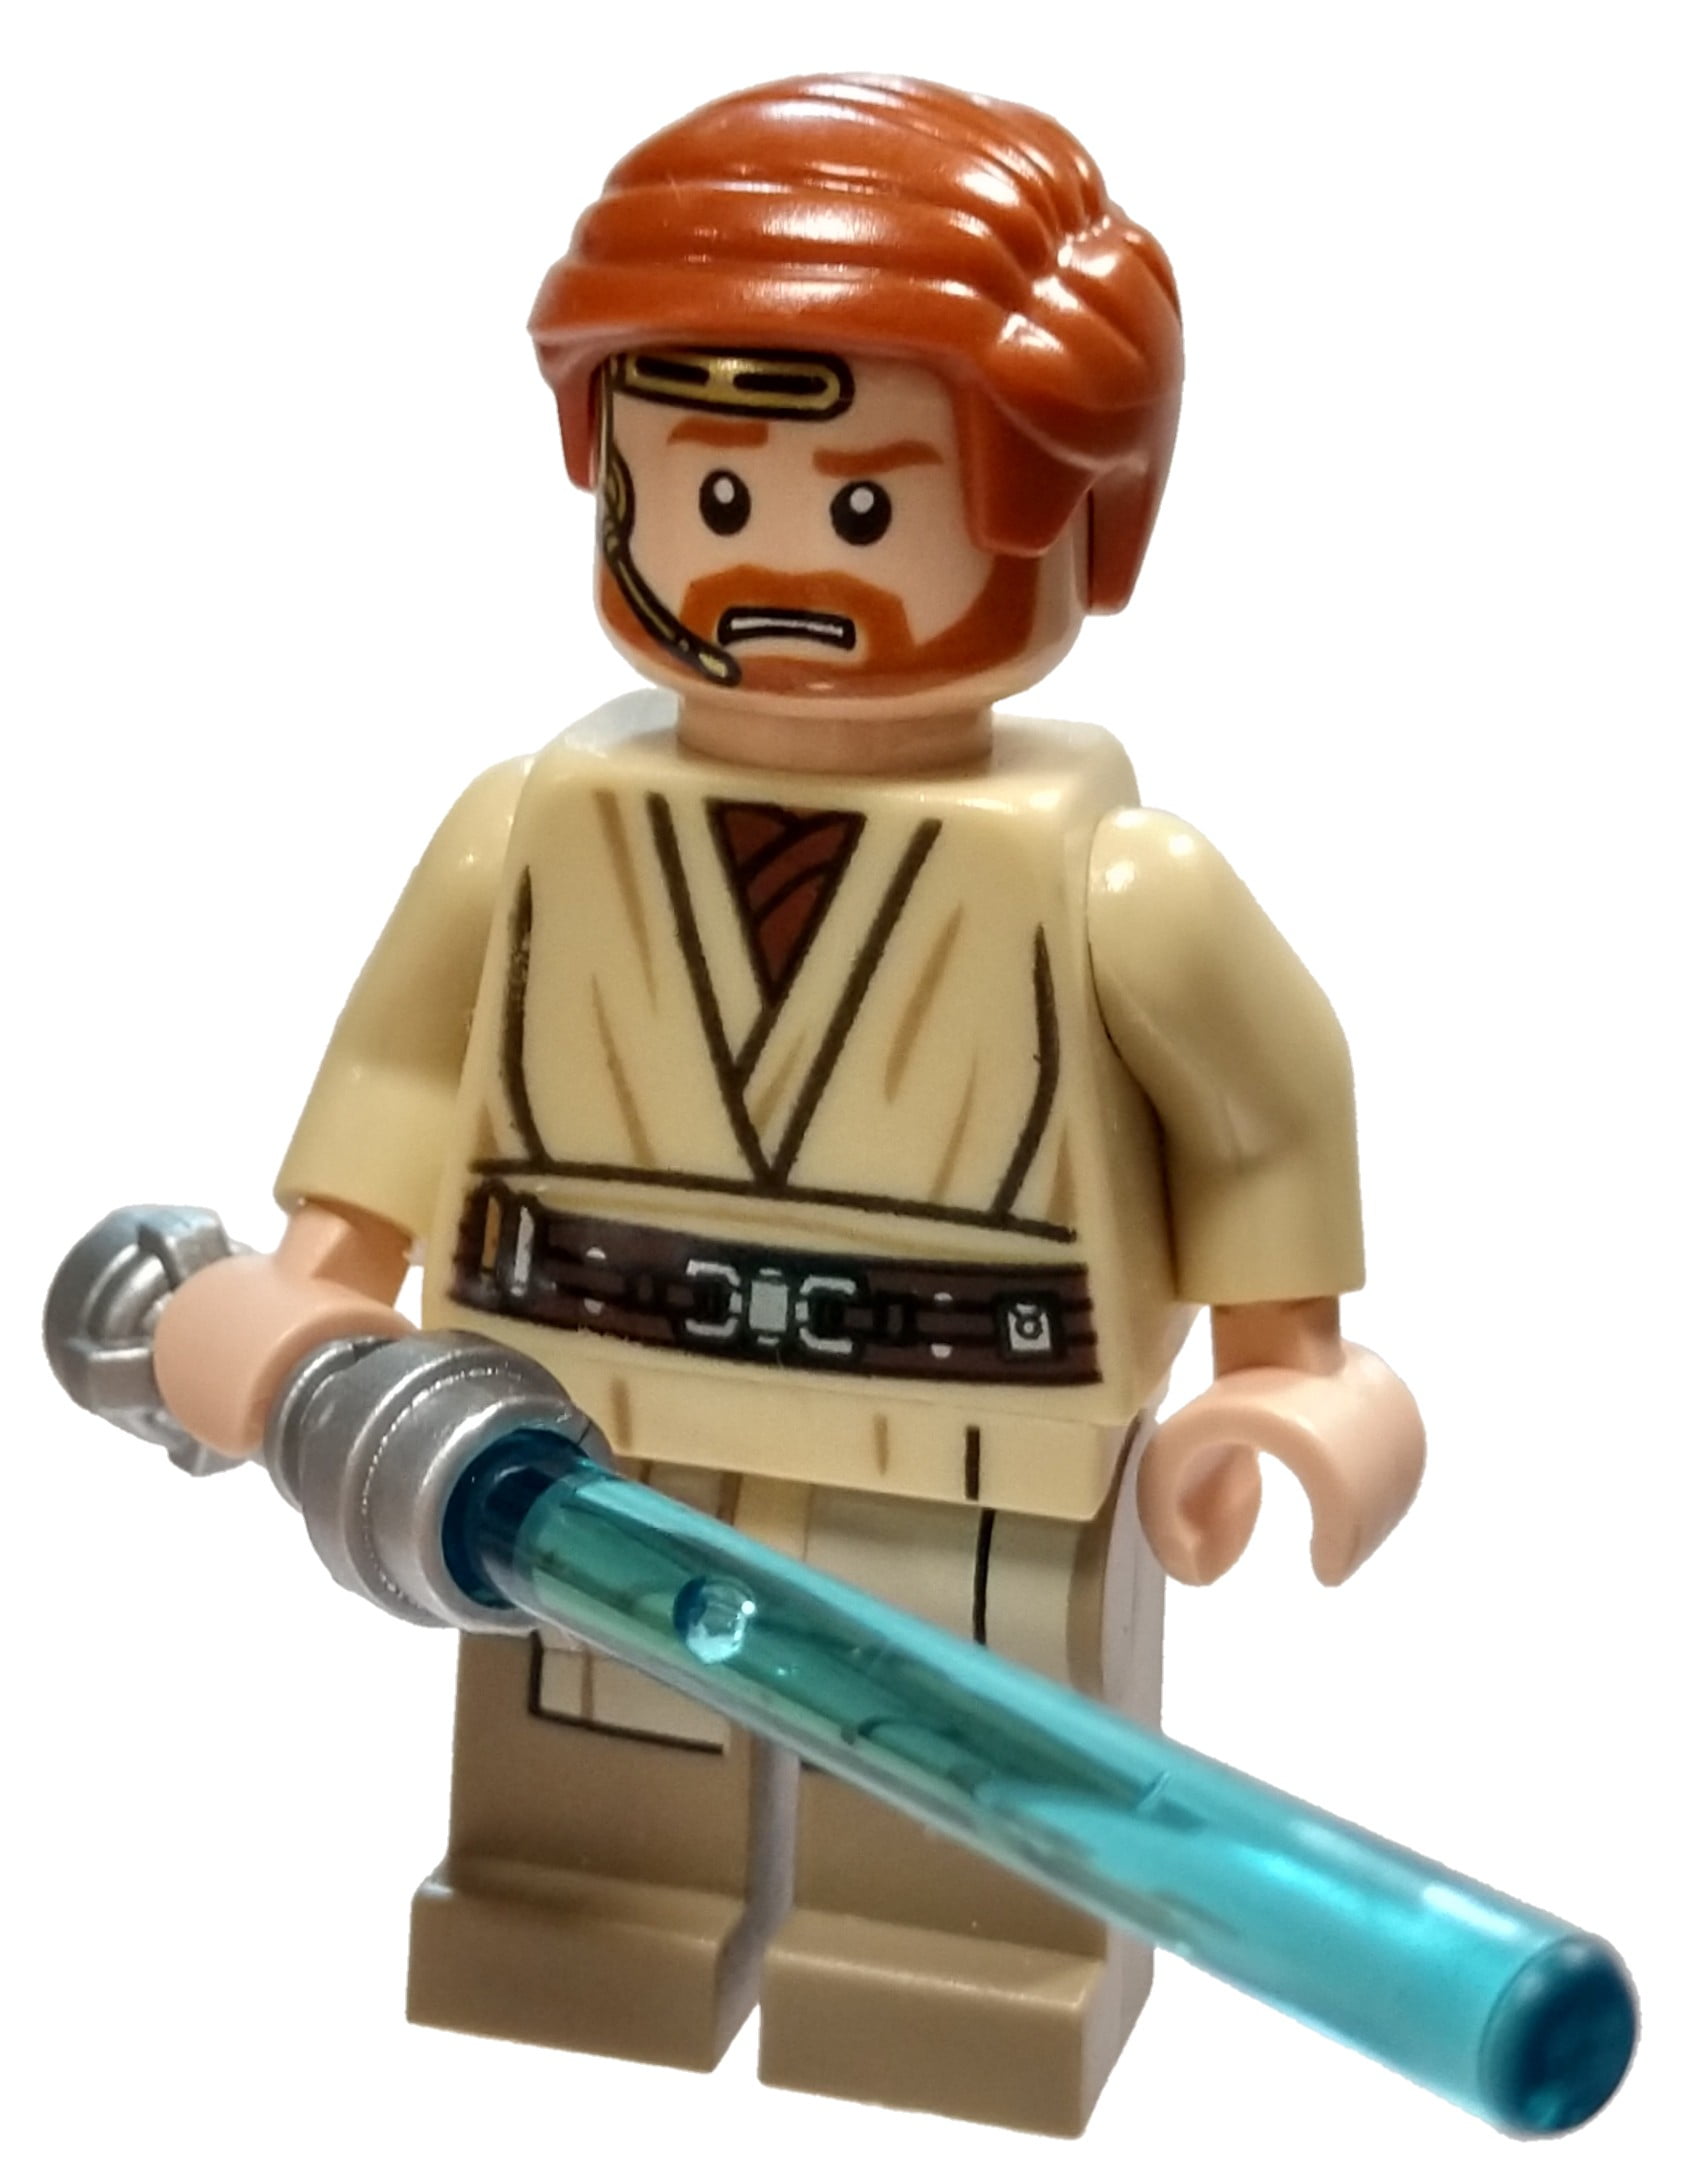 WEAPONS FOR MINIFIGURES LEGO bulk starwars trans yellow light saber packs!! 